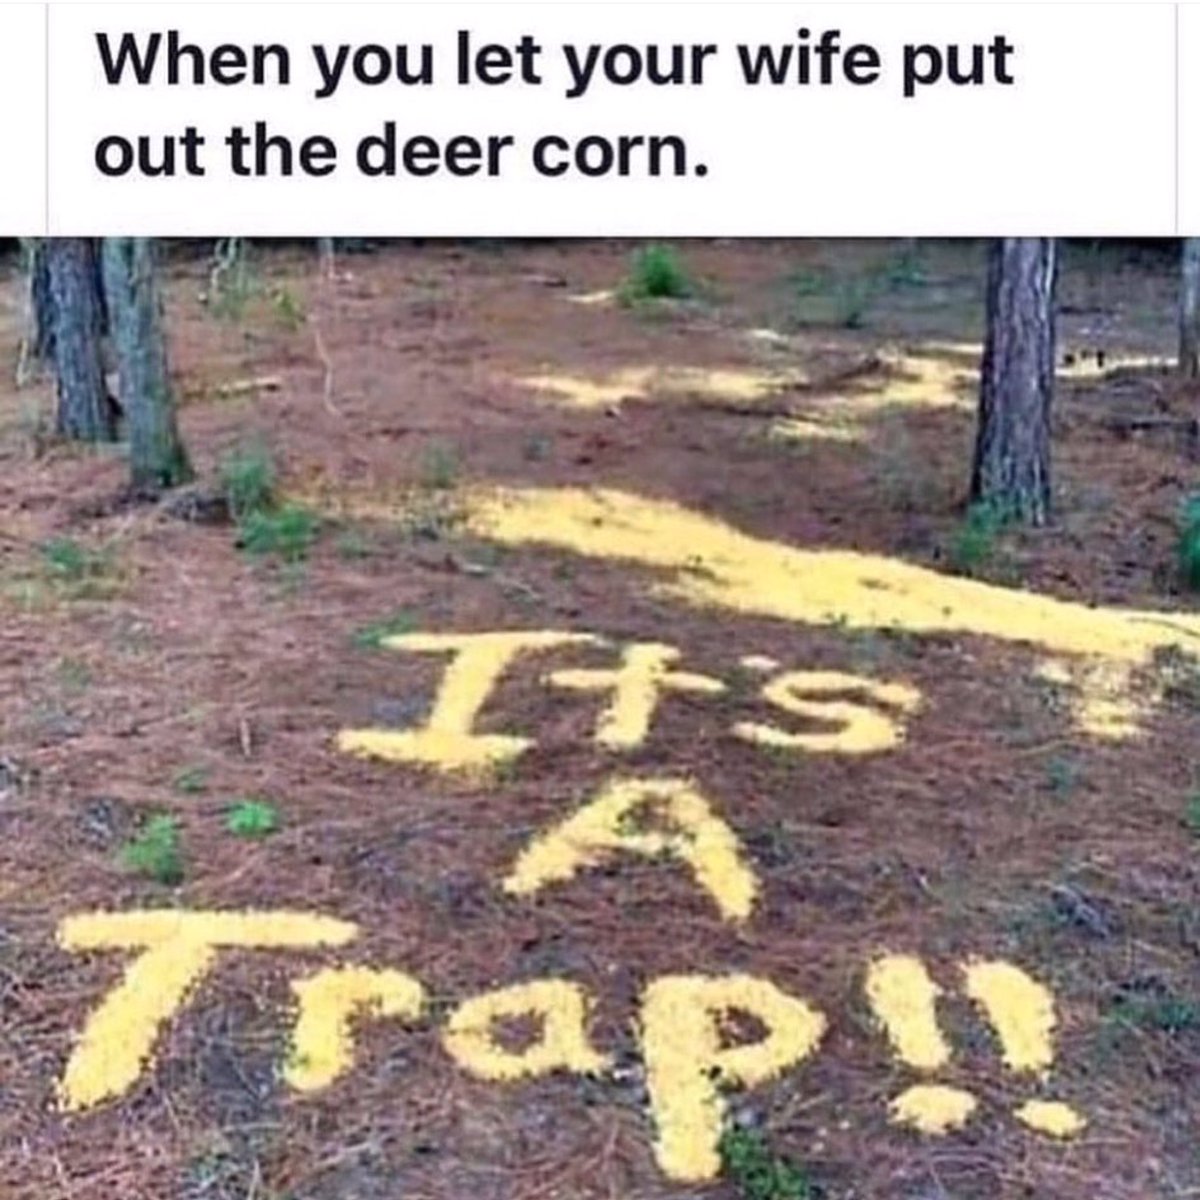 Where Do You Put Corn for Deer? 